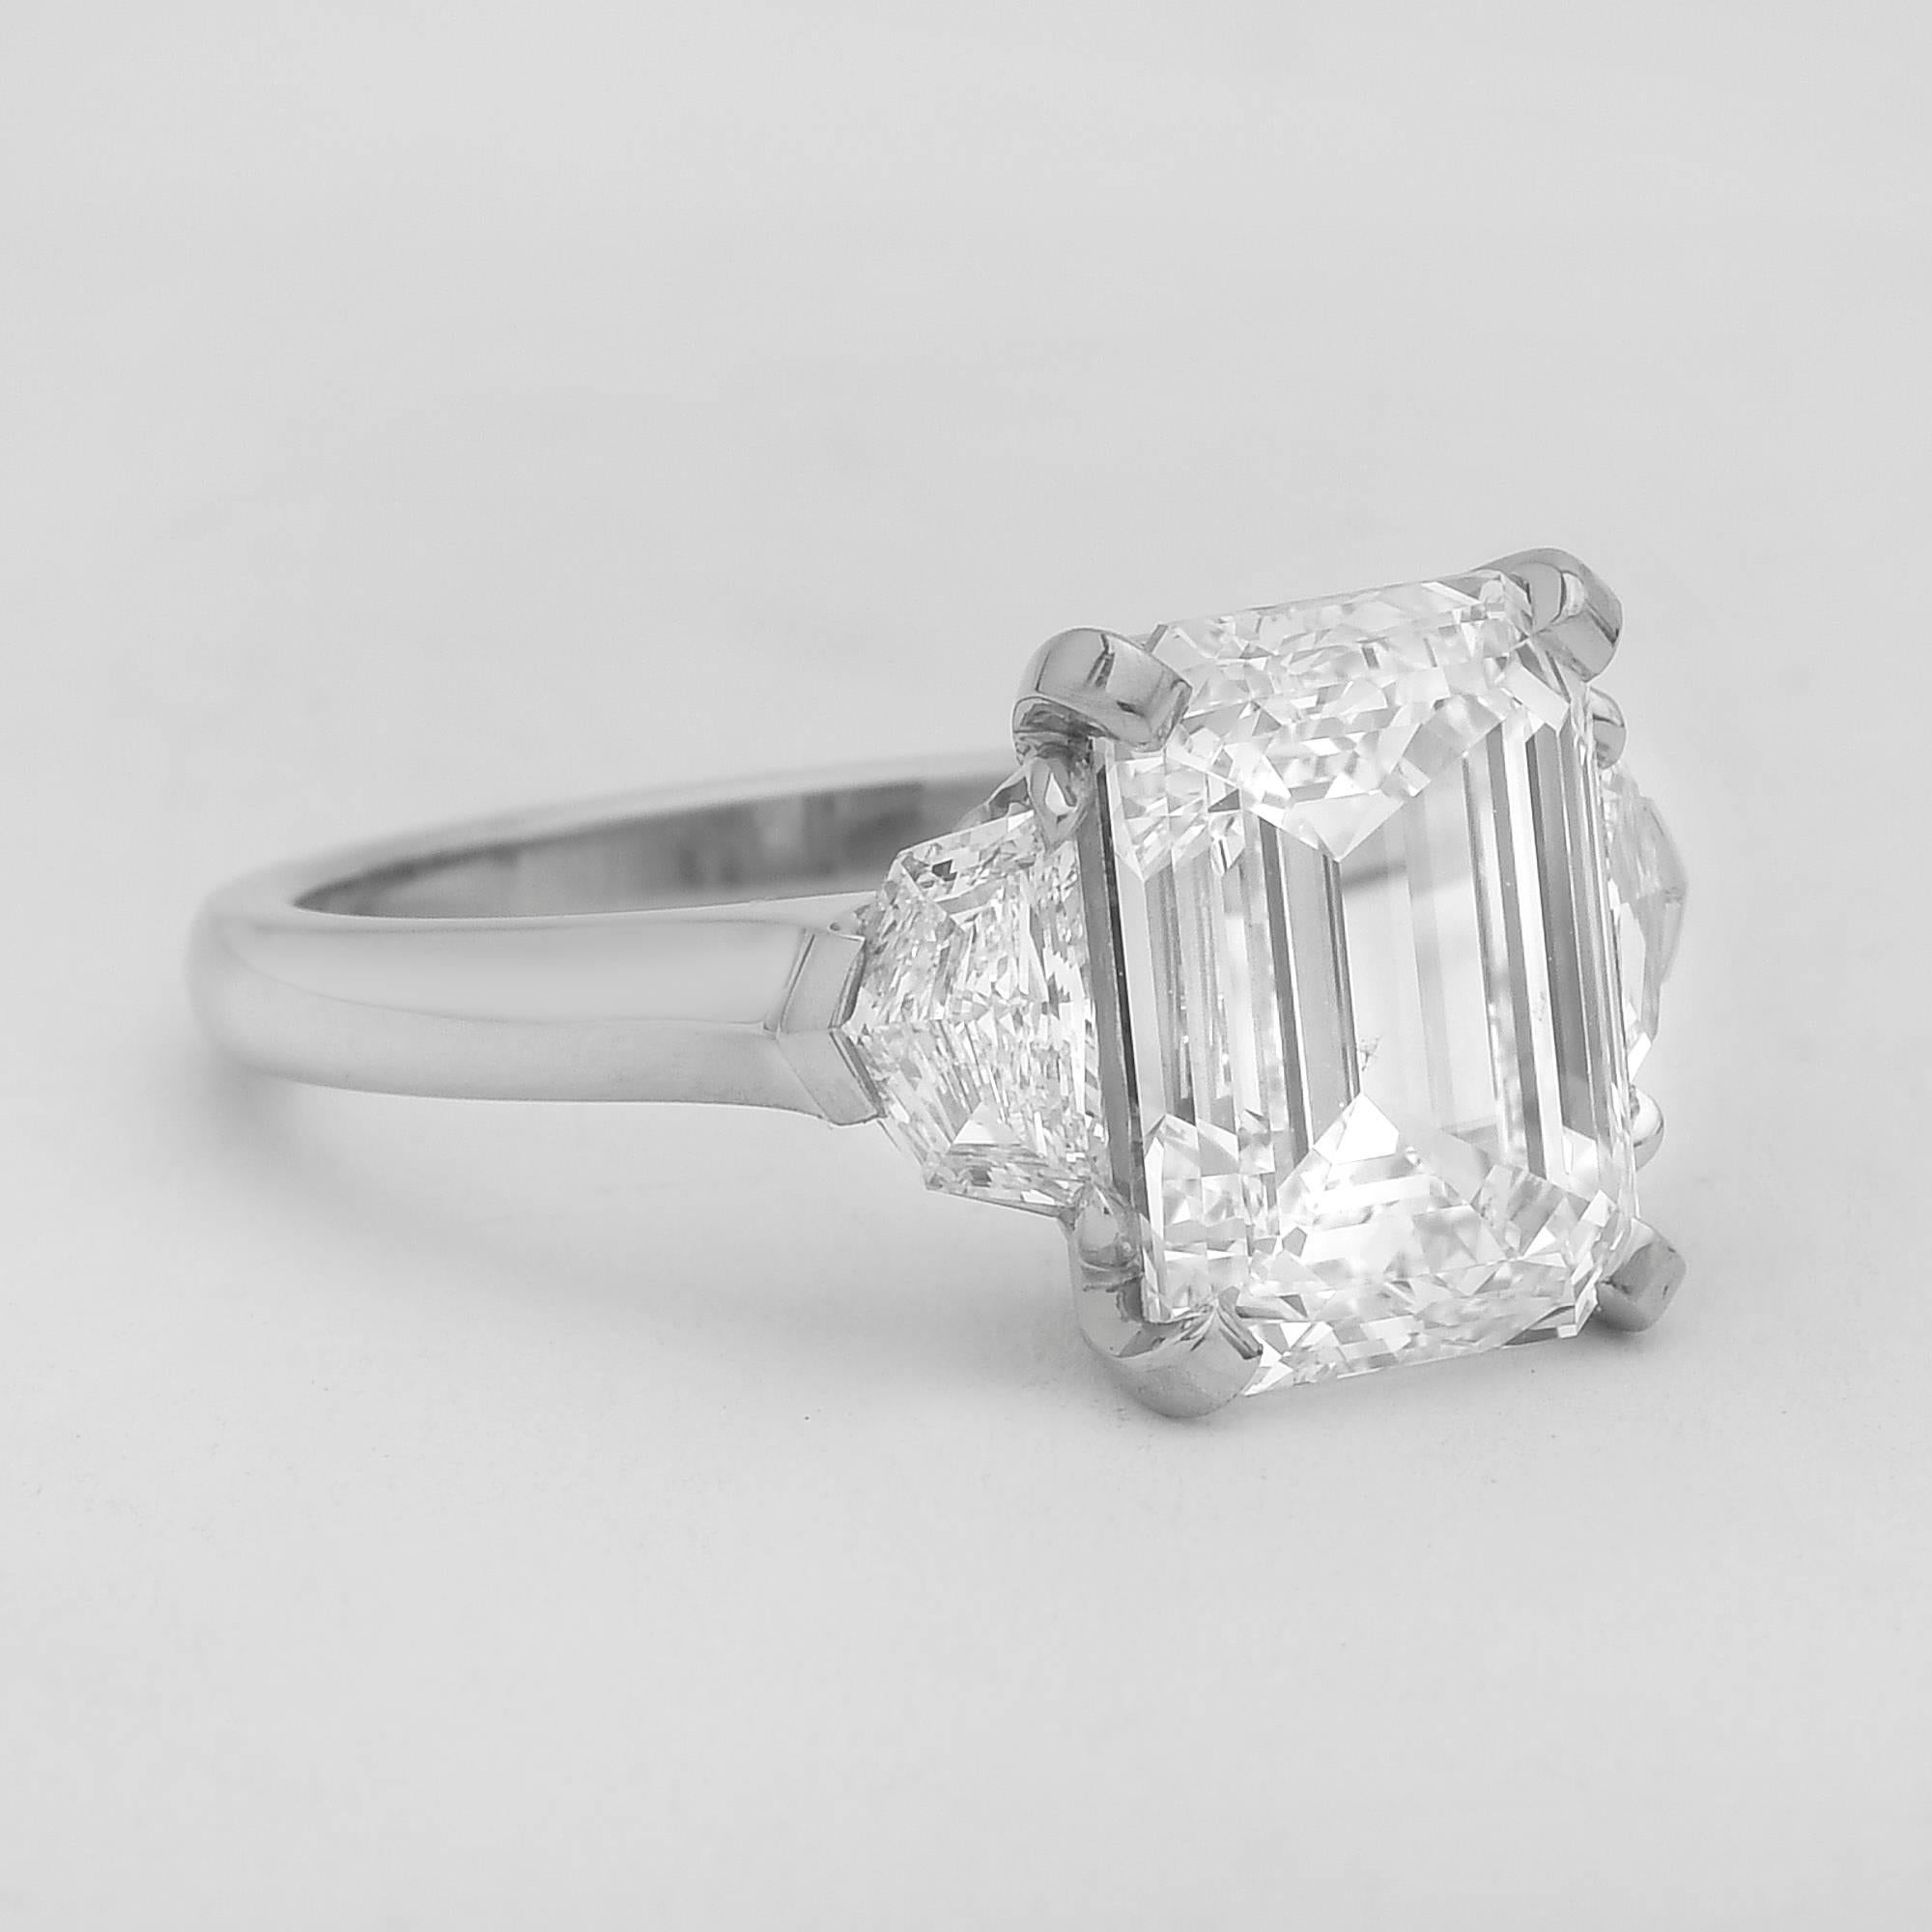 Betteridge GIA Report 4.11 Carat Emerald-Cut Diamond Engagement Ring 2